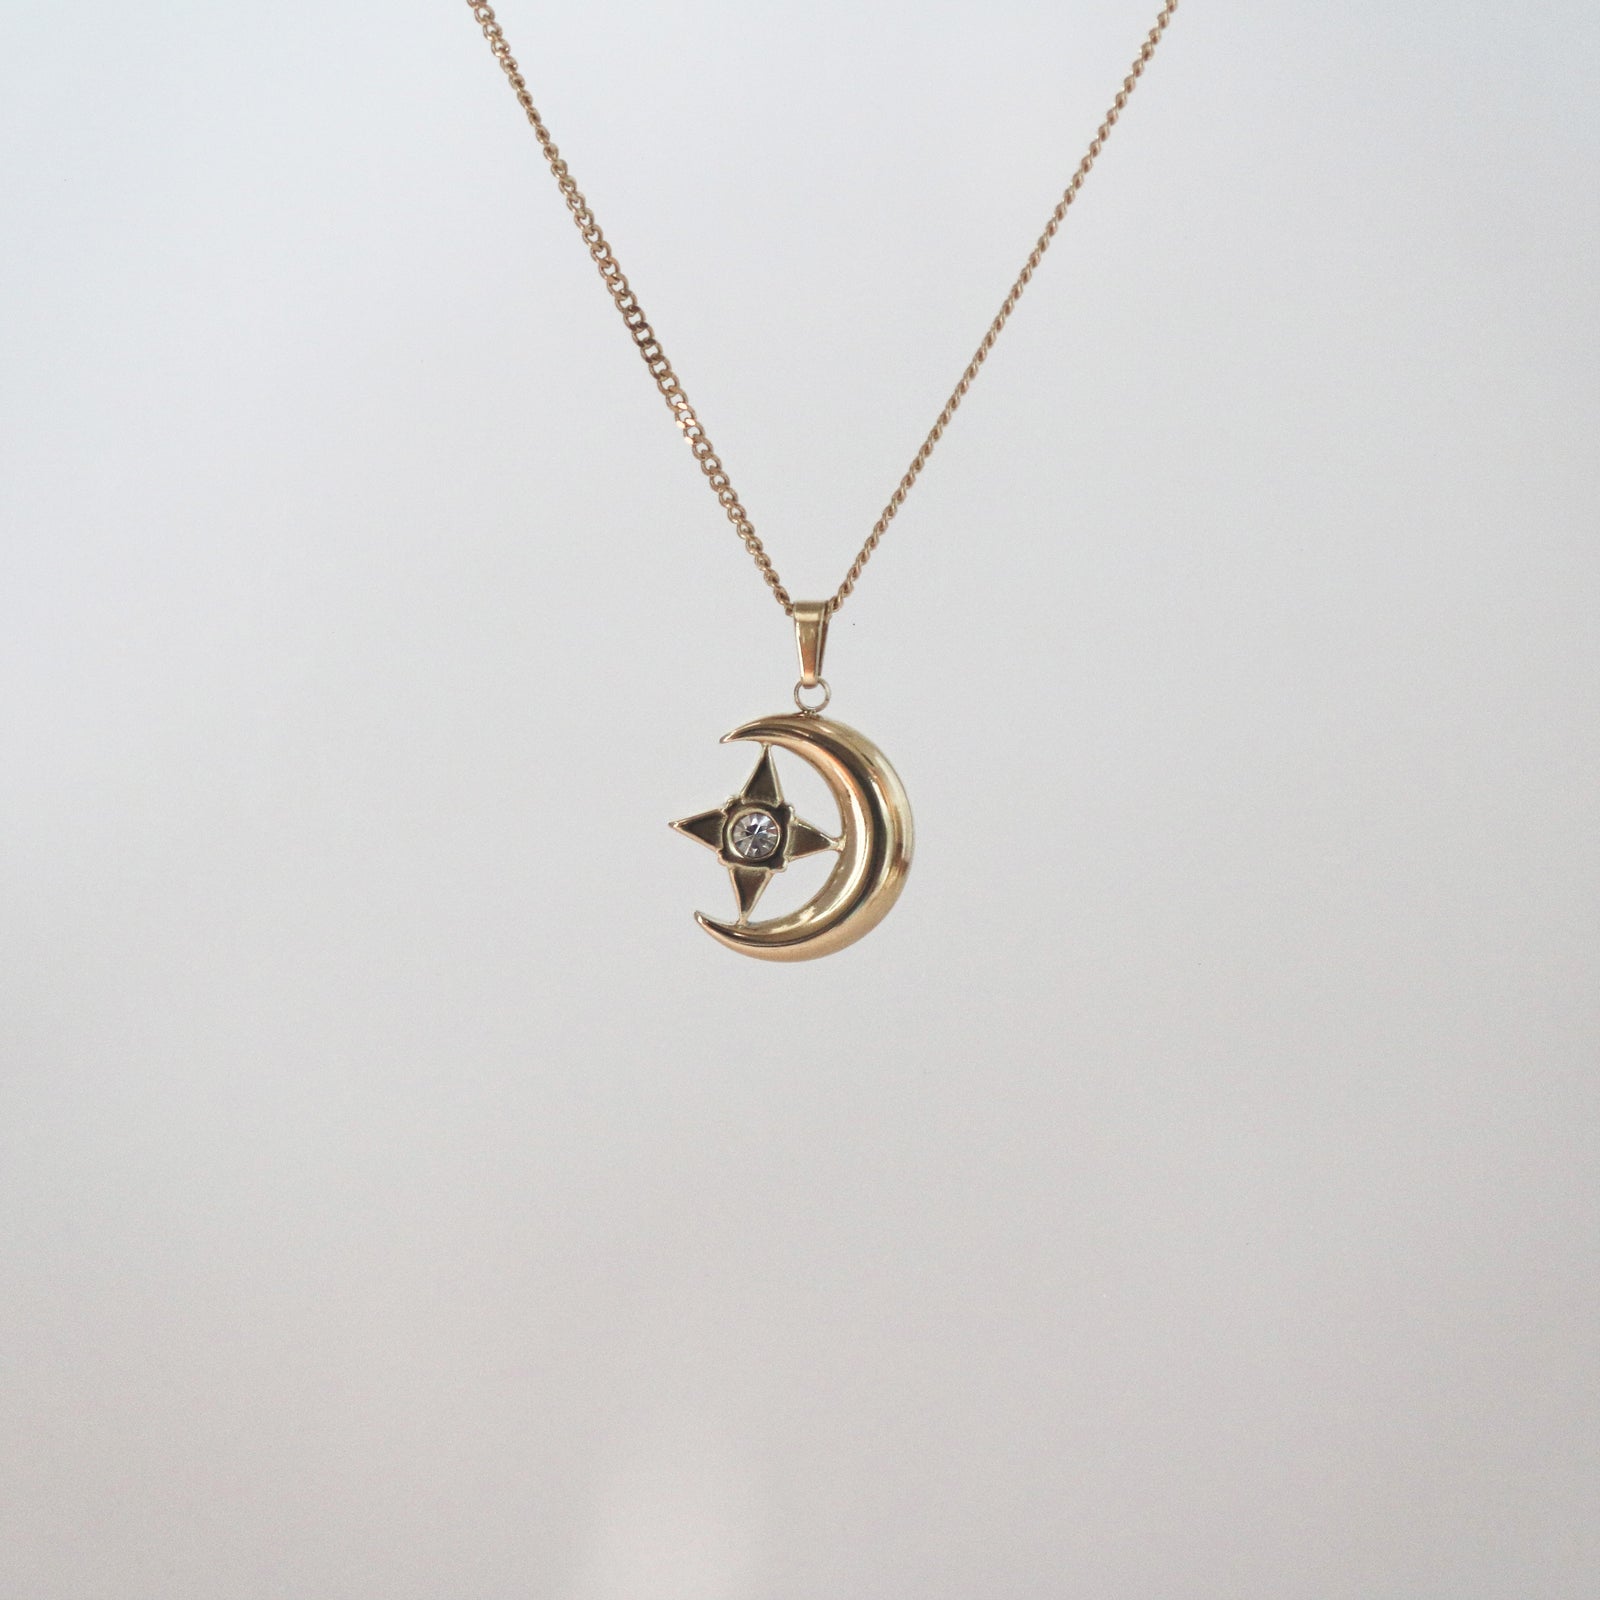 Meideya Jewelry Crescent Moon Star Pendant Necklace